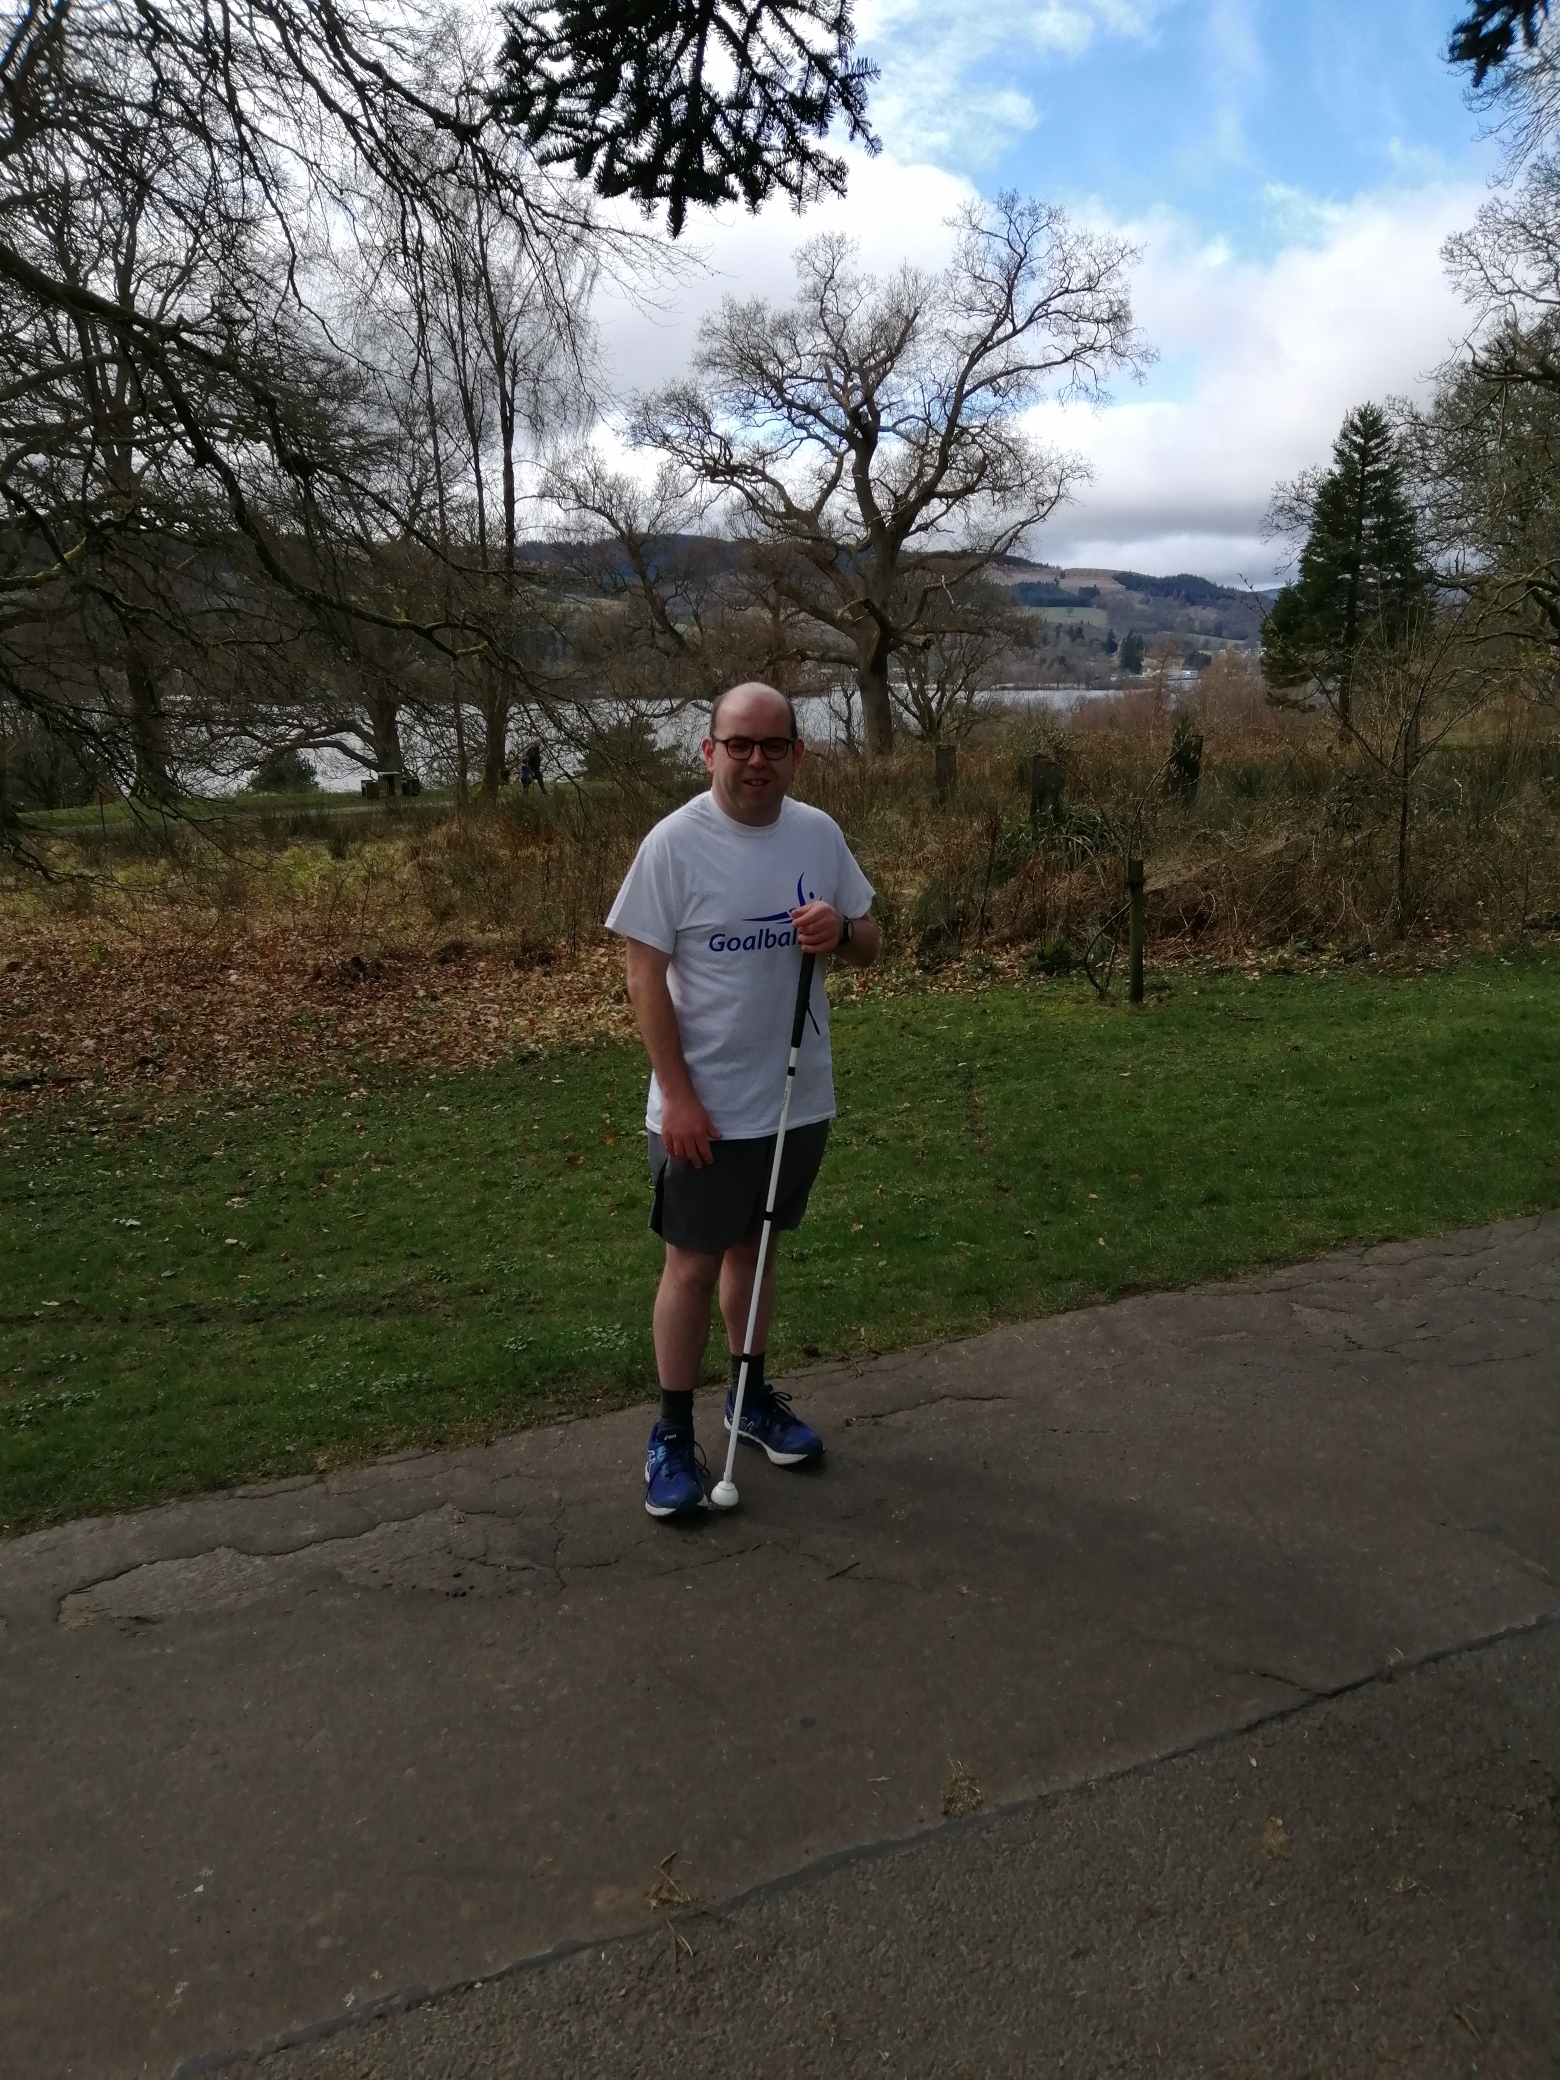 Graeme stood in the park wearing a Goalball UK t-shirt